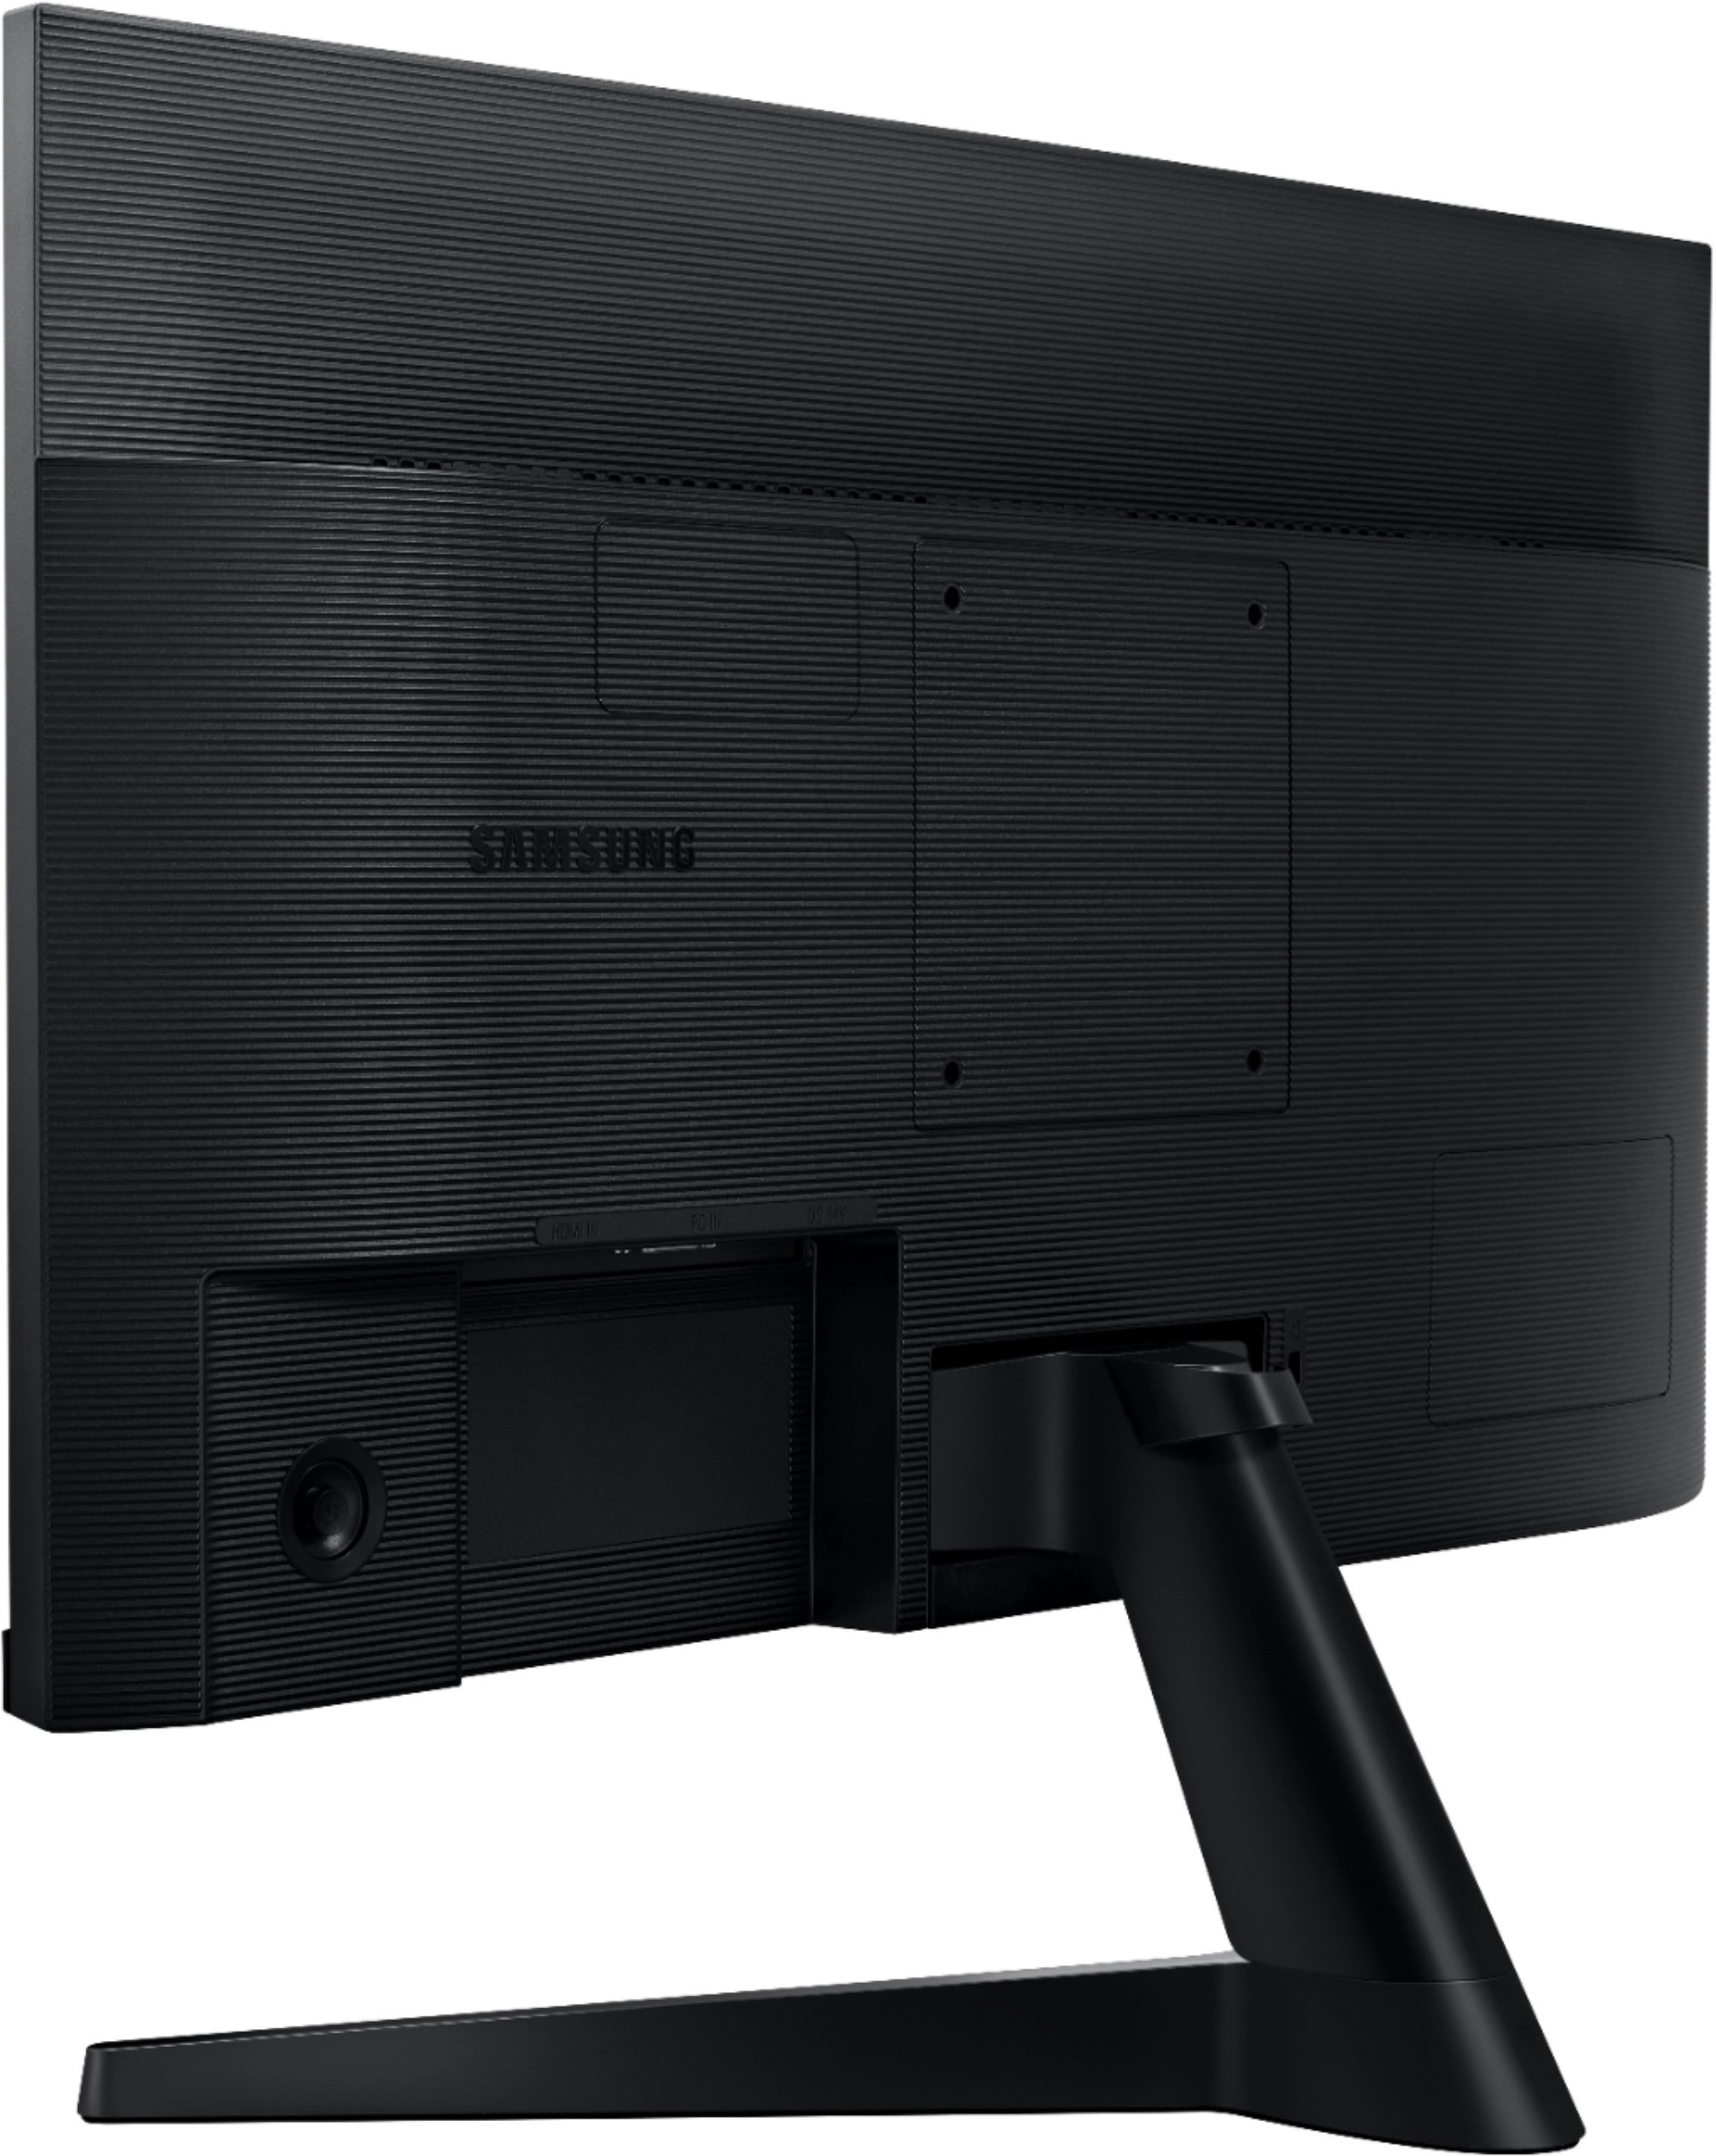 Samsung 24 FHD IPS Computer Monitor, AMD FreeSync, HDMI & VGA (T350  Series) - Dark Blue/Gray